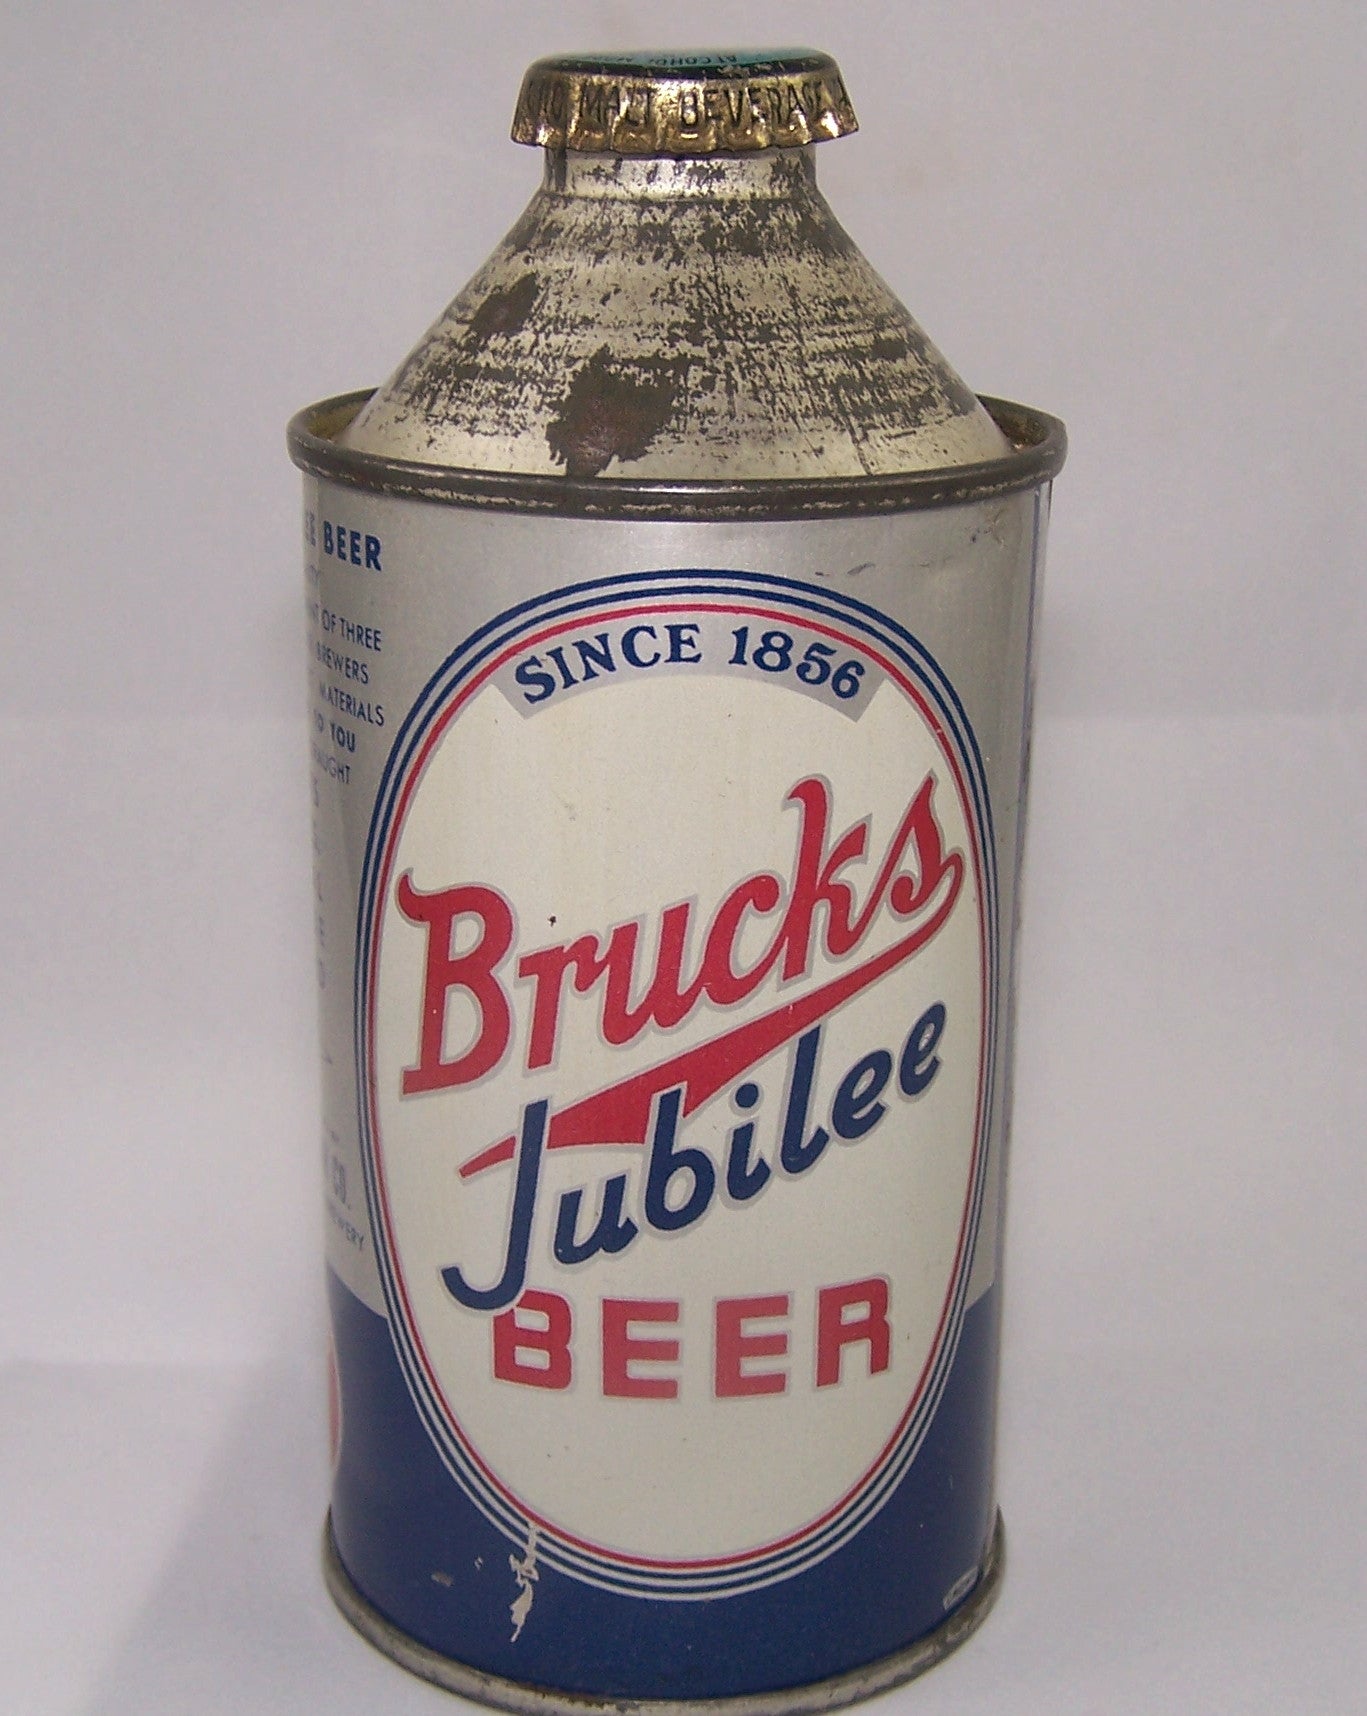 Brucks Jubilee Beer, USBC 154-28, Grade 1 to 1/1+ Sold on 4/1/15